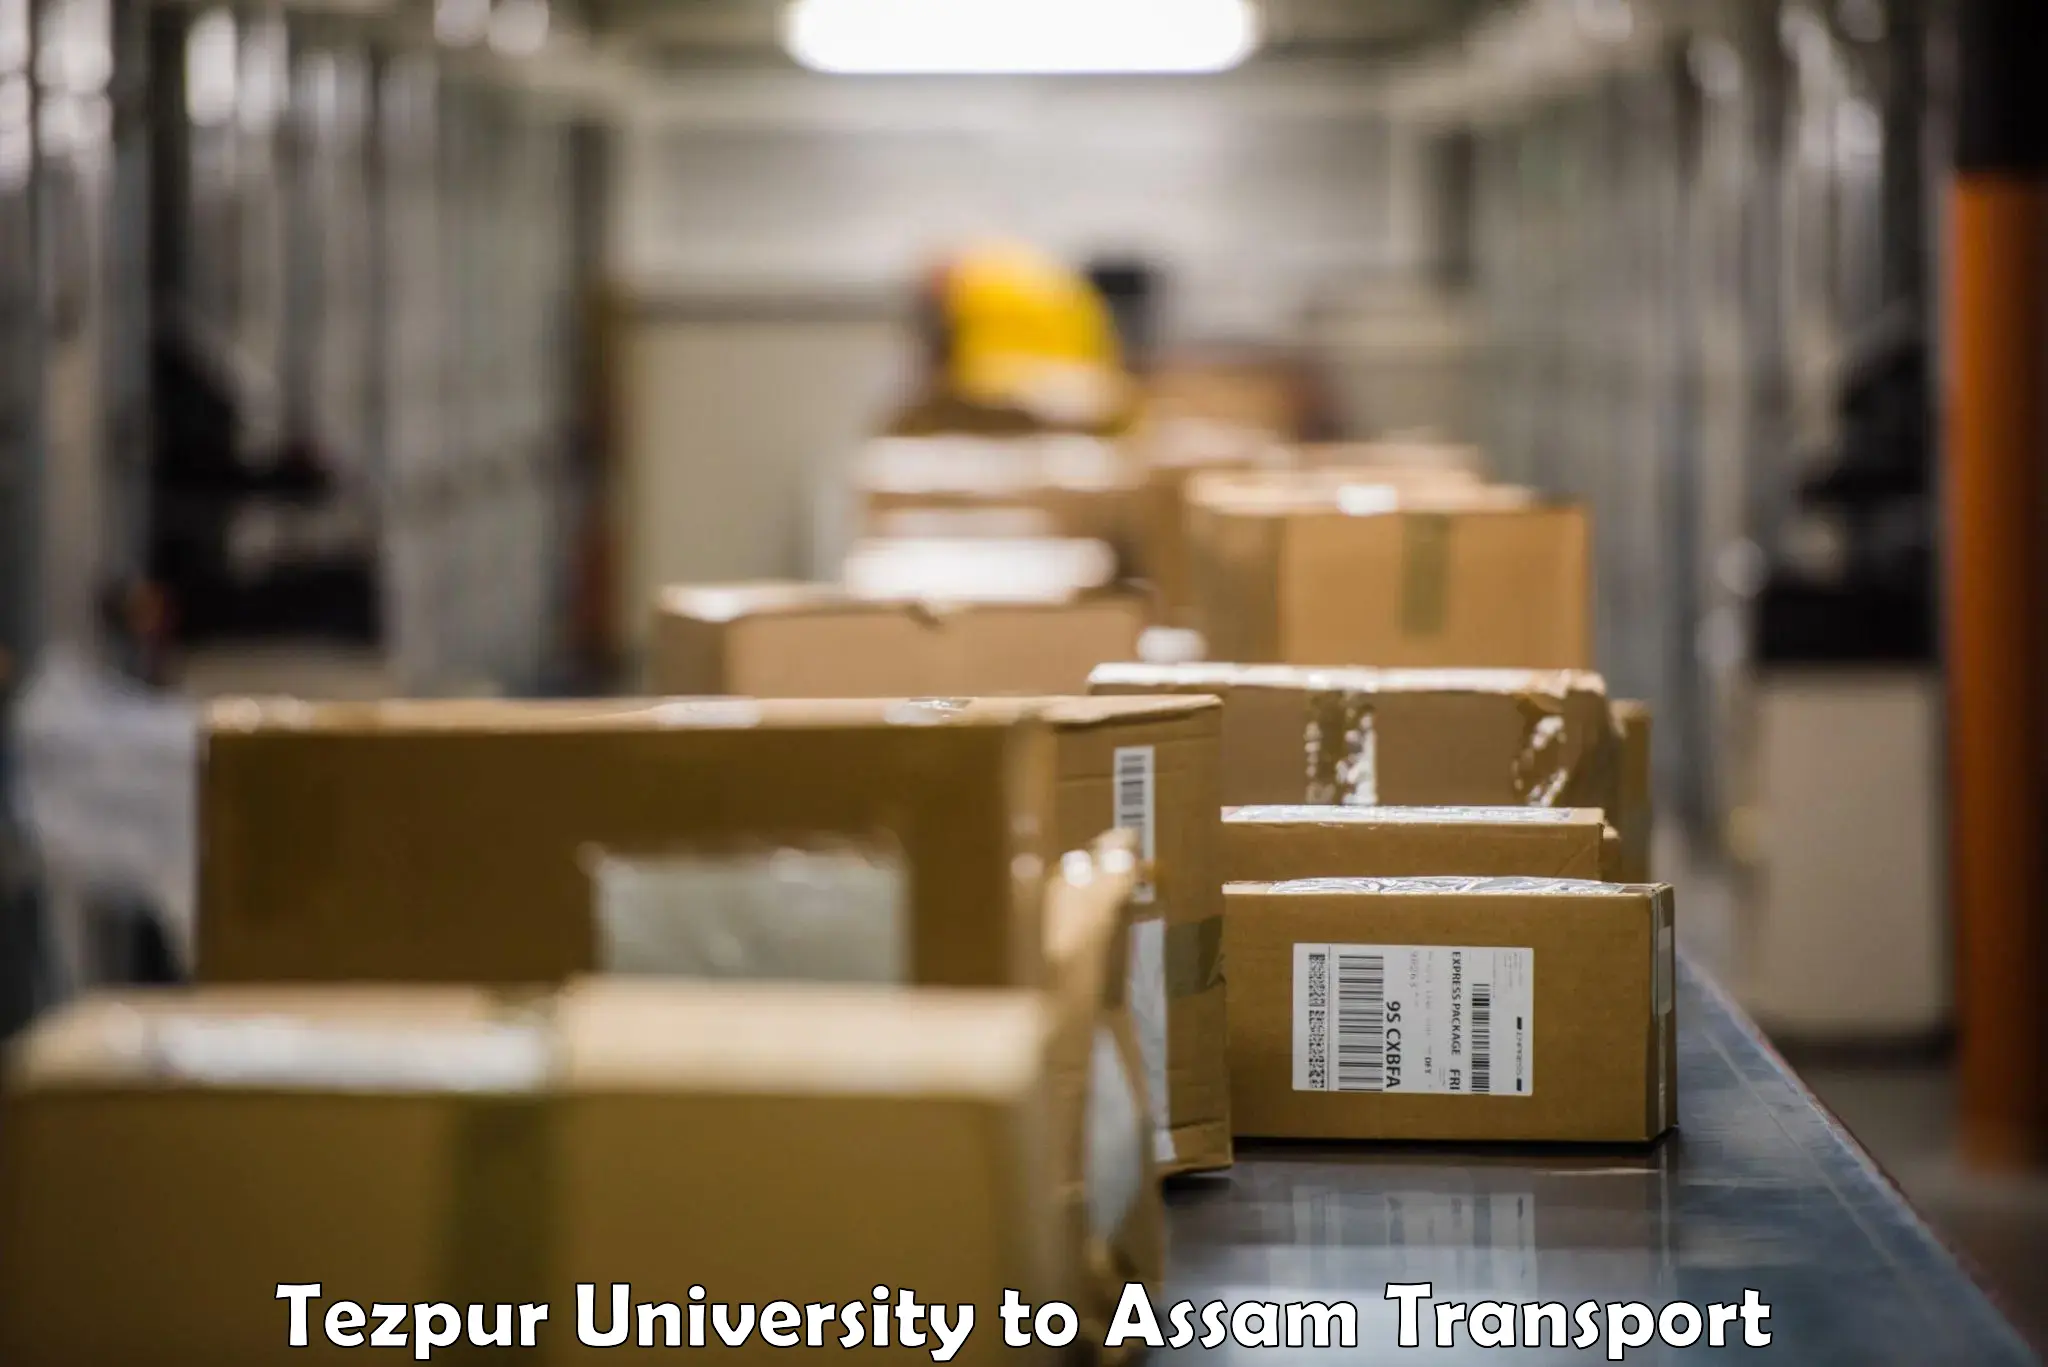 Commercial transport service Tezpur University to Dhupdhara